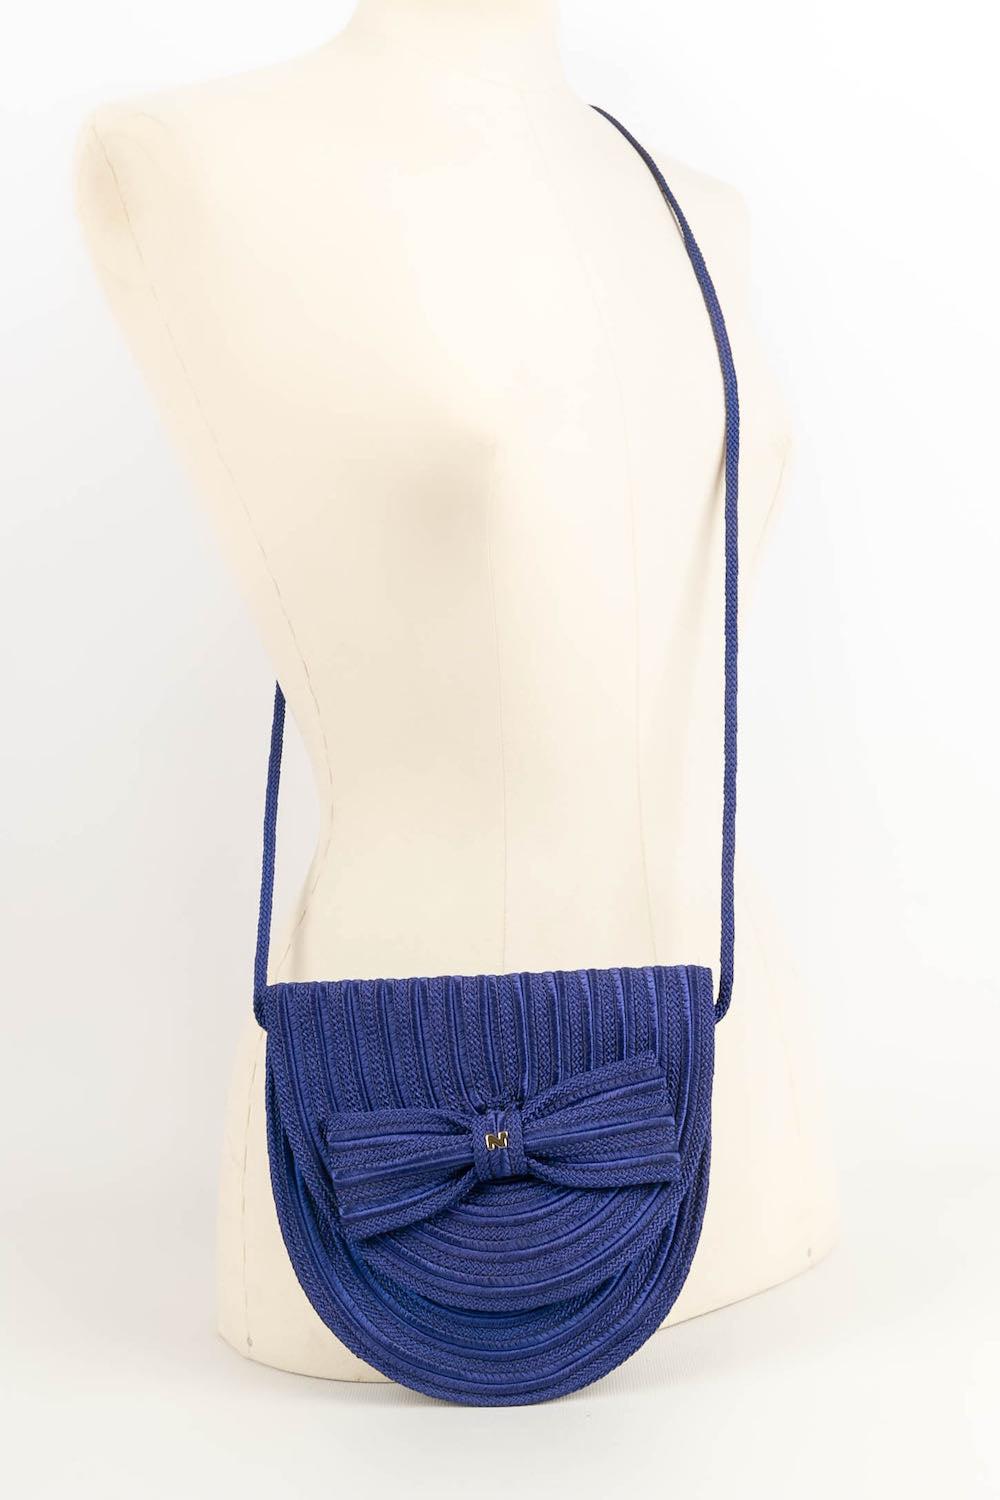 Nina Ricci Blue Passementerie Bag For Sale 4